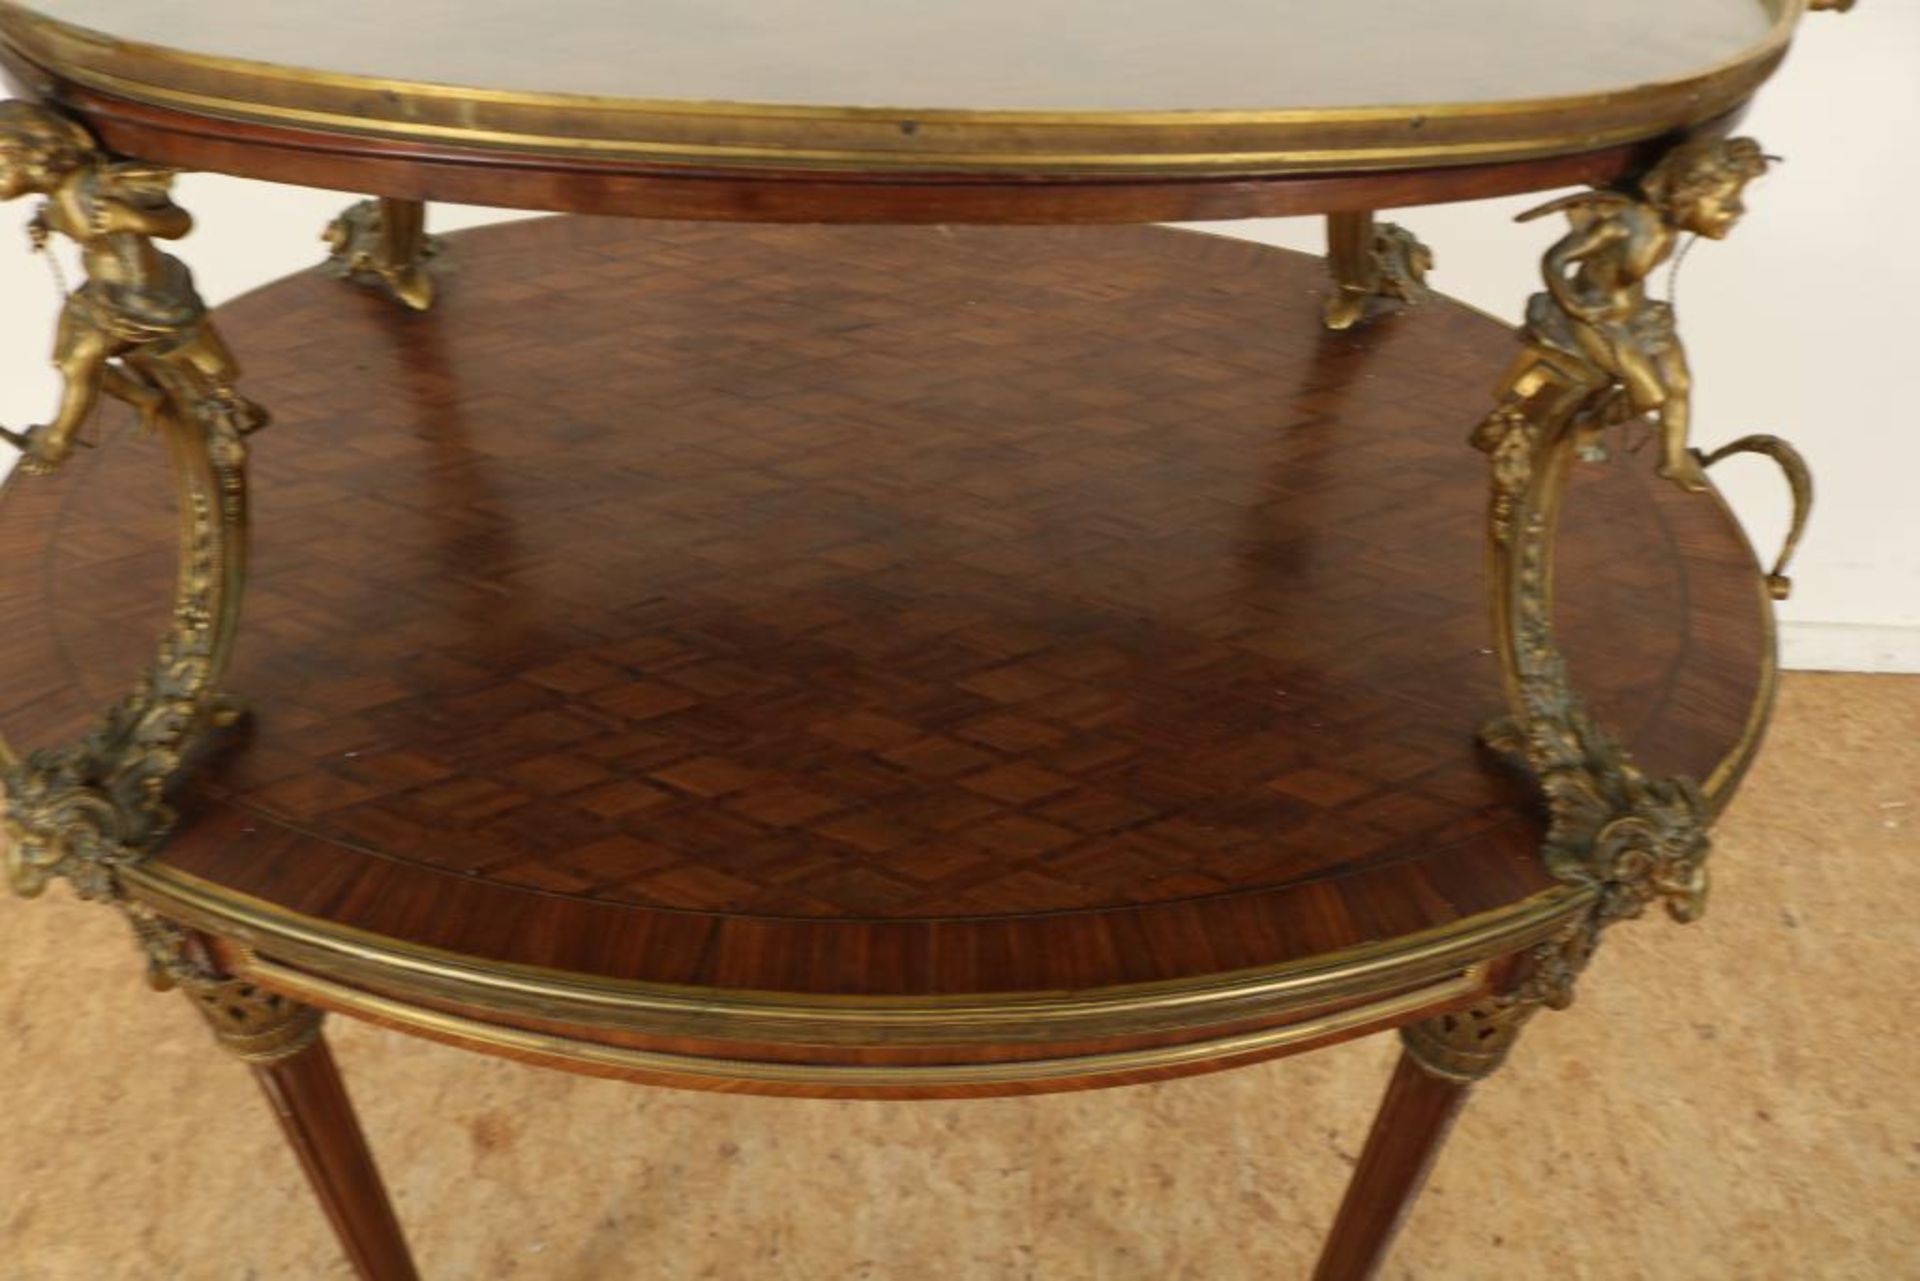 Mahonie gefineerd Louis XVI-stijl tafel - Image 6 of 6